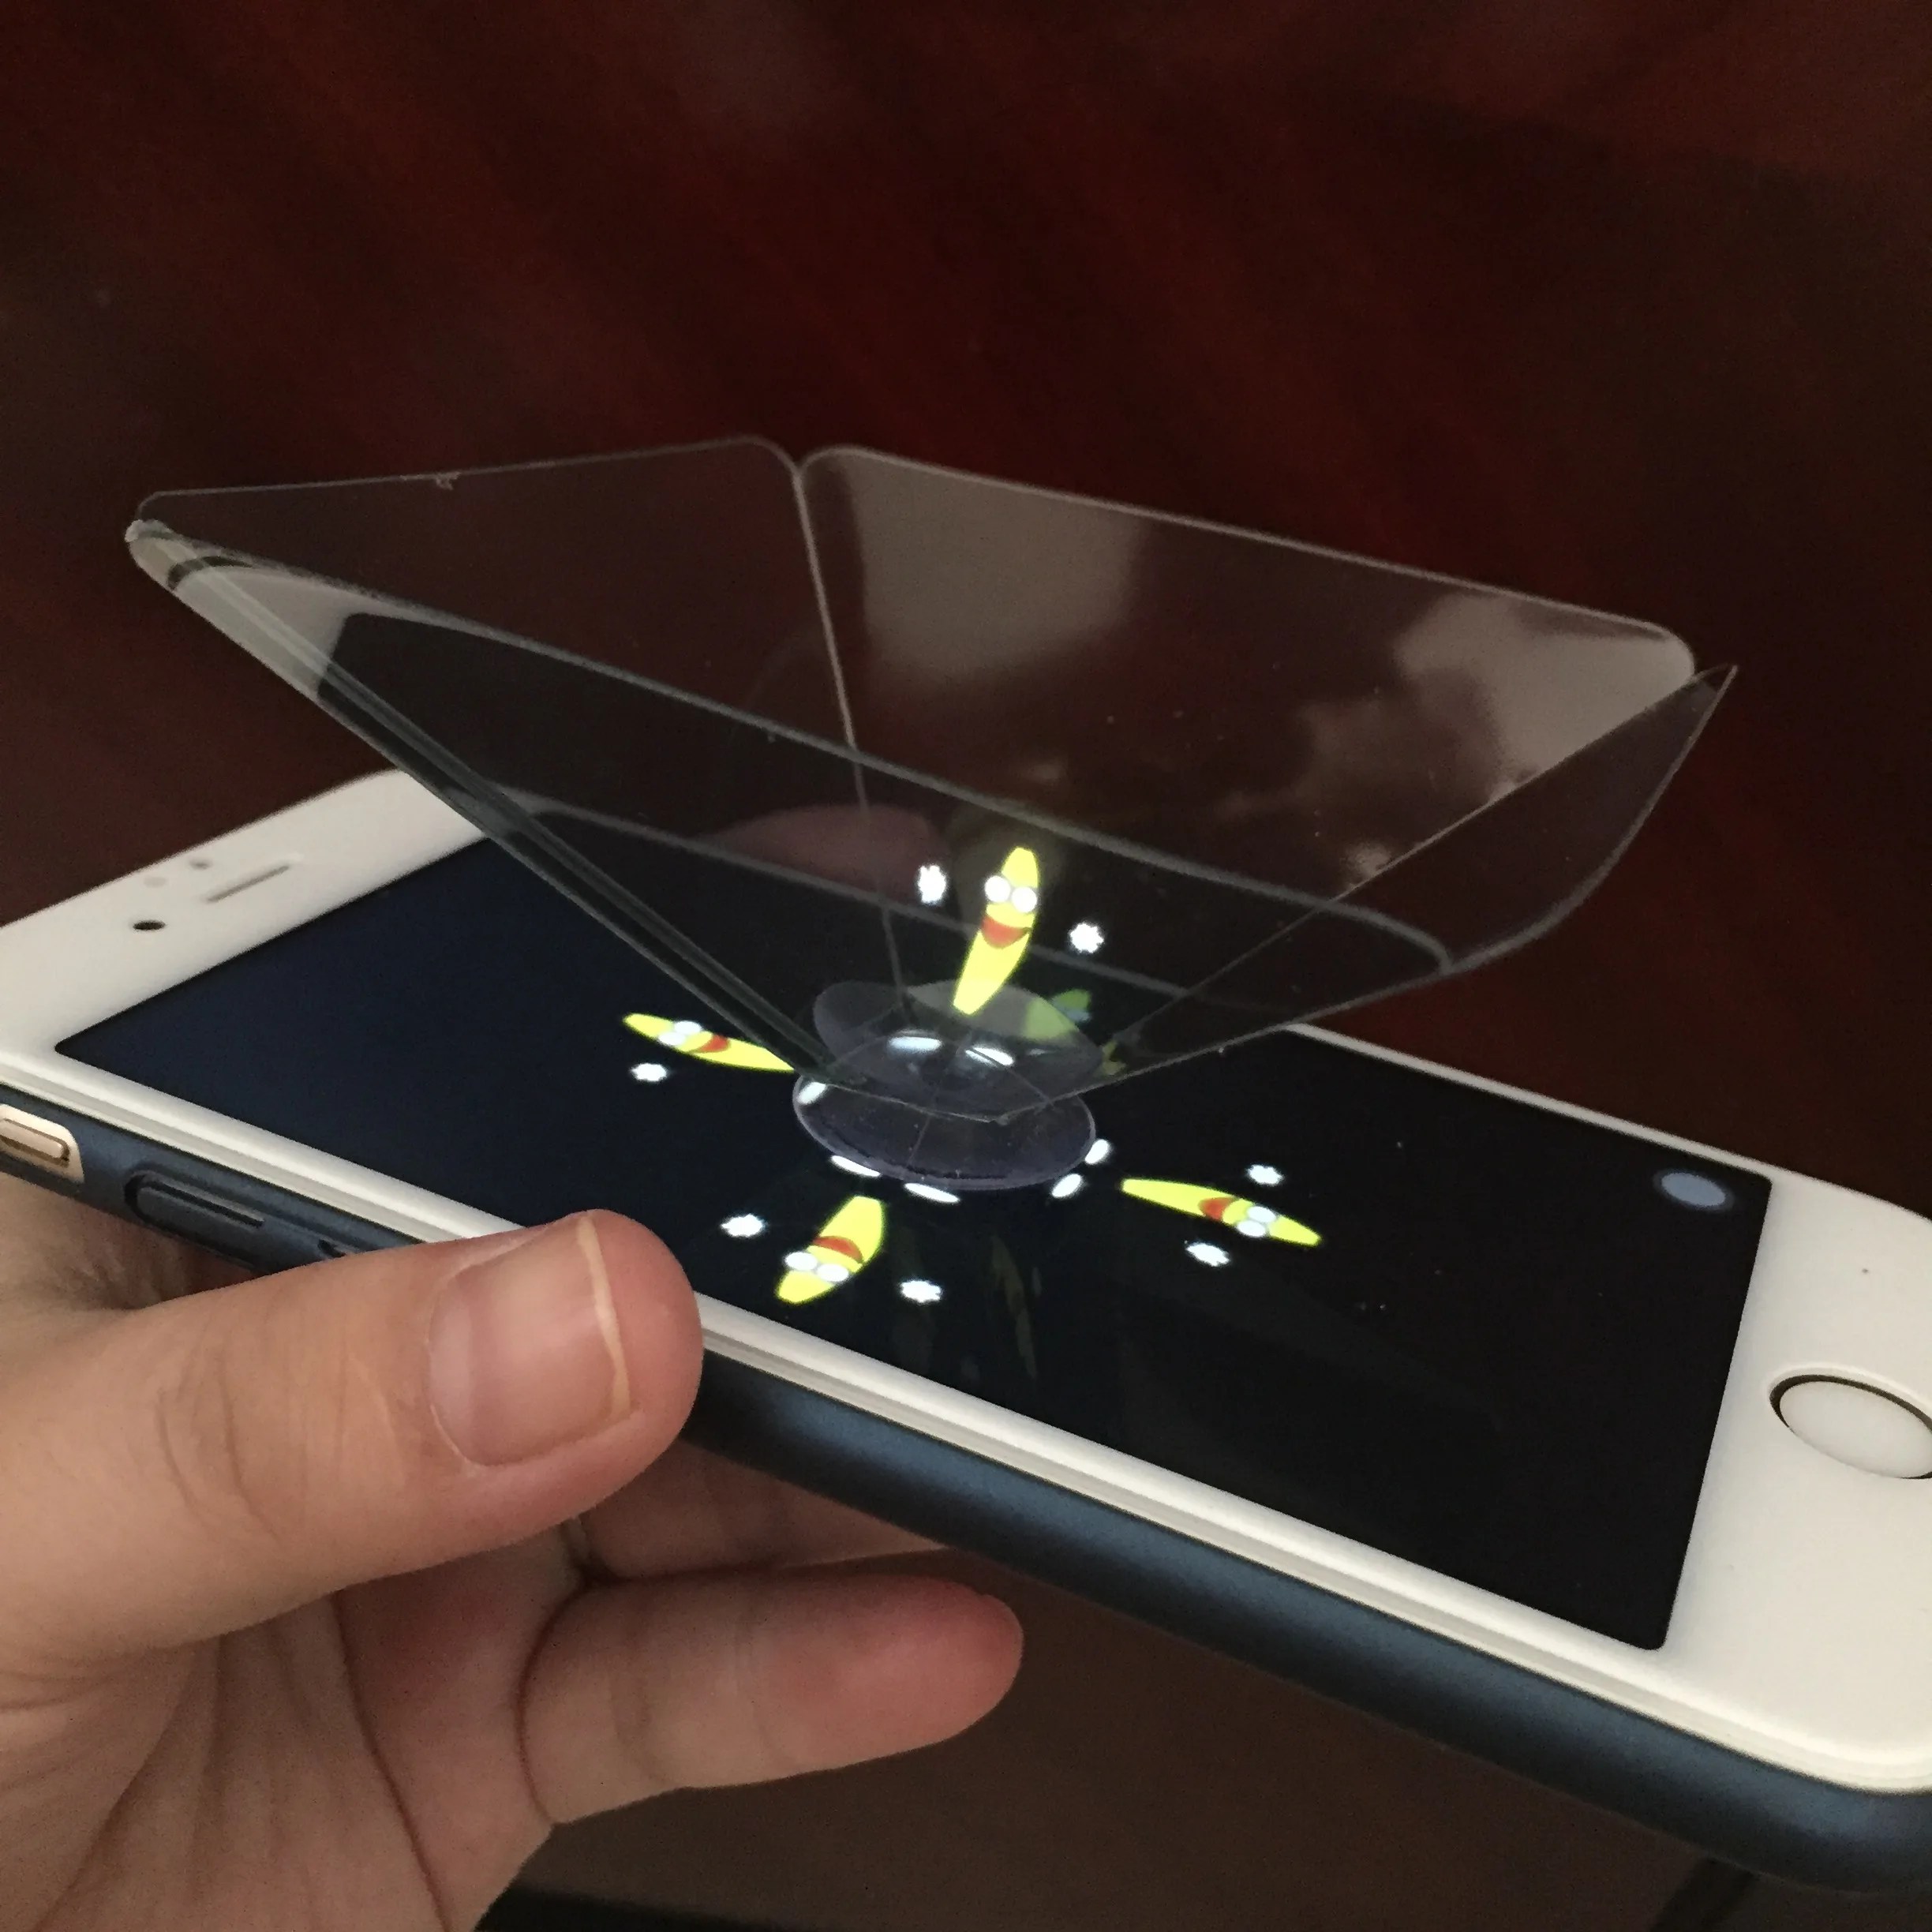 Smartphone 3D Hologram Projector